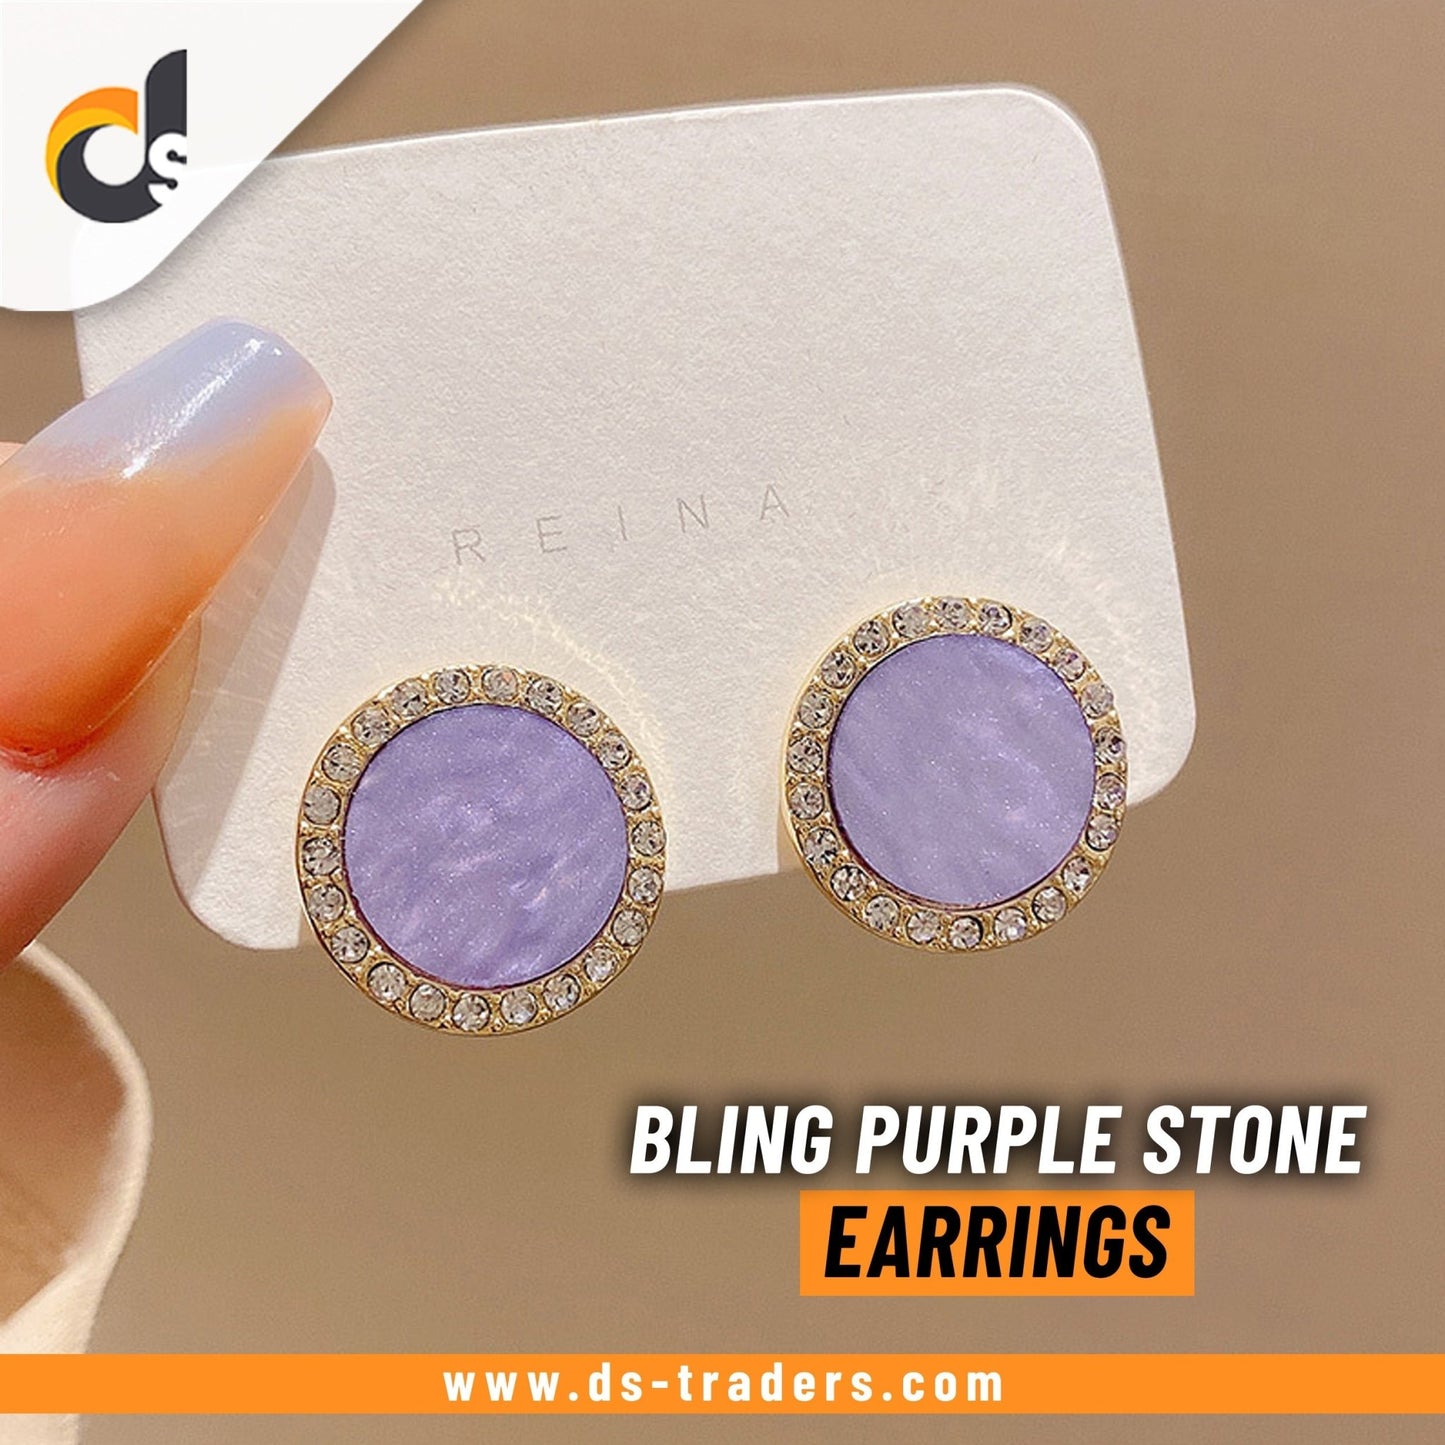 Bling Purple Stone Earrings - DS Traders